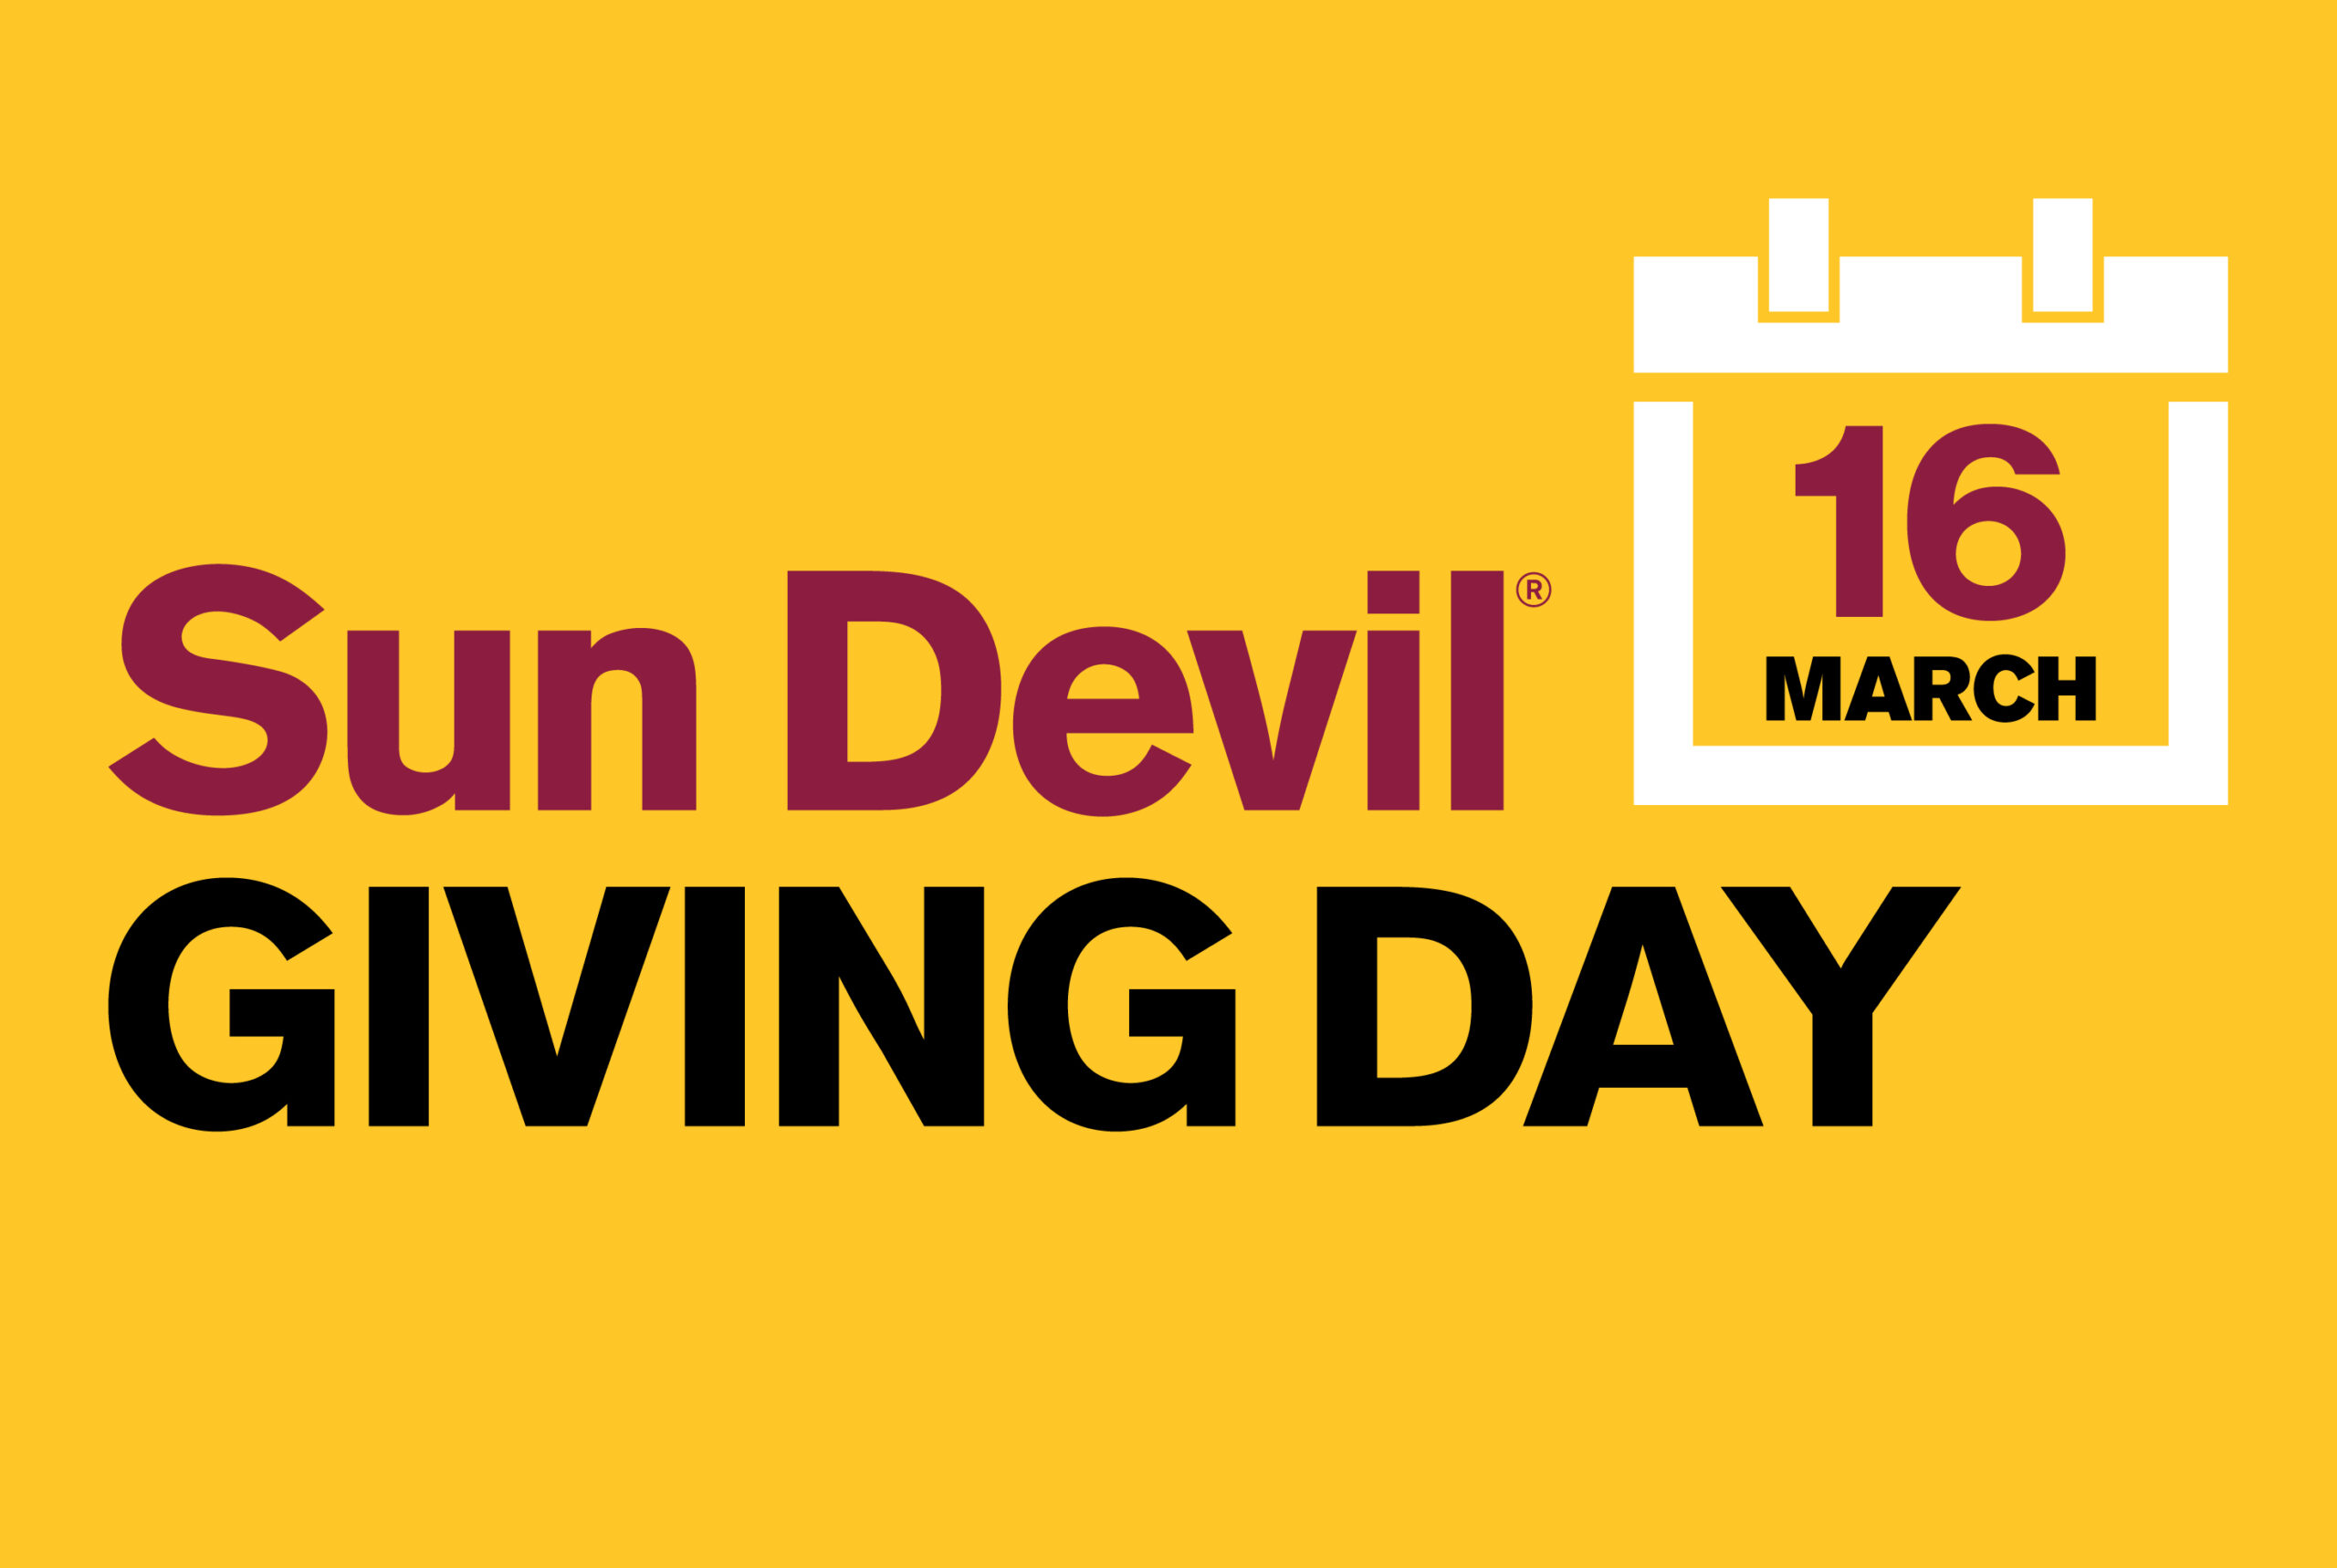 Sun Devil Giving Day, March 16